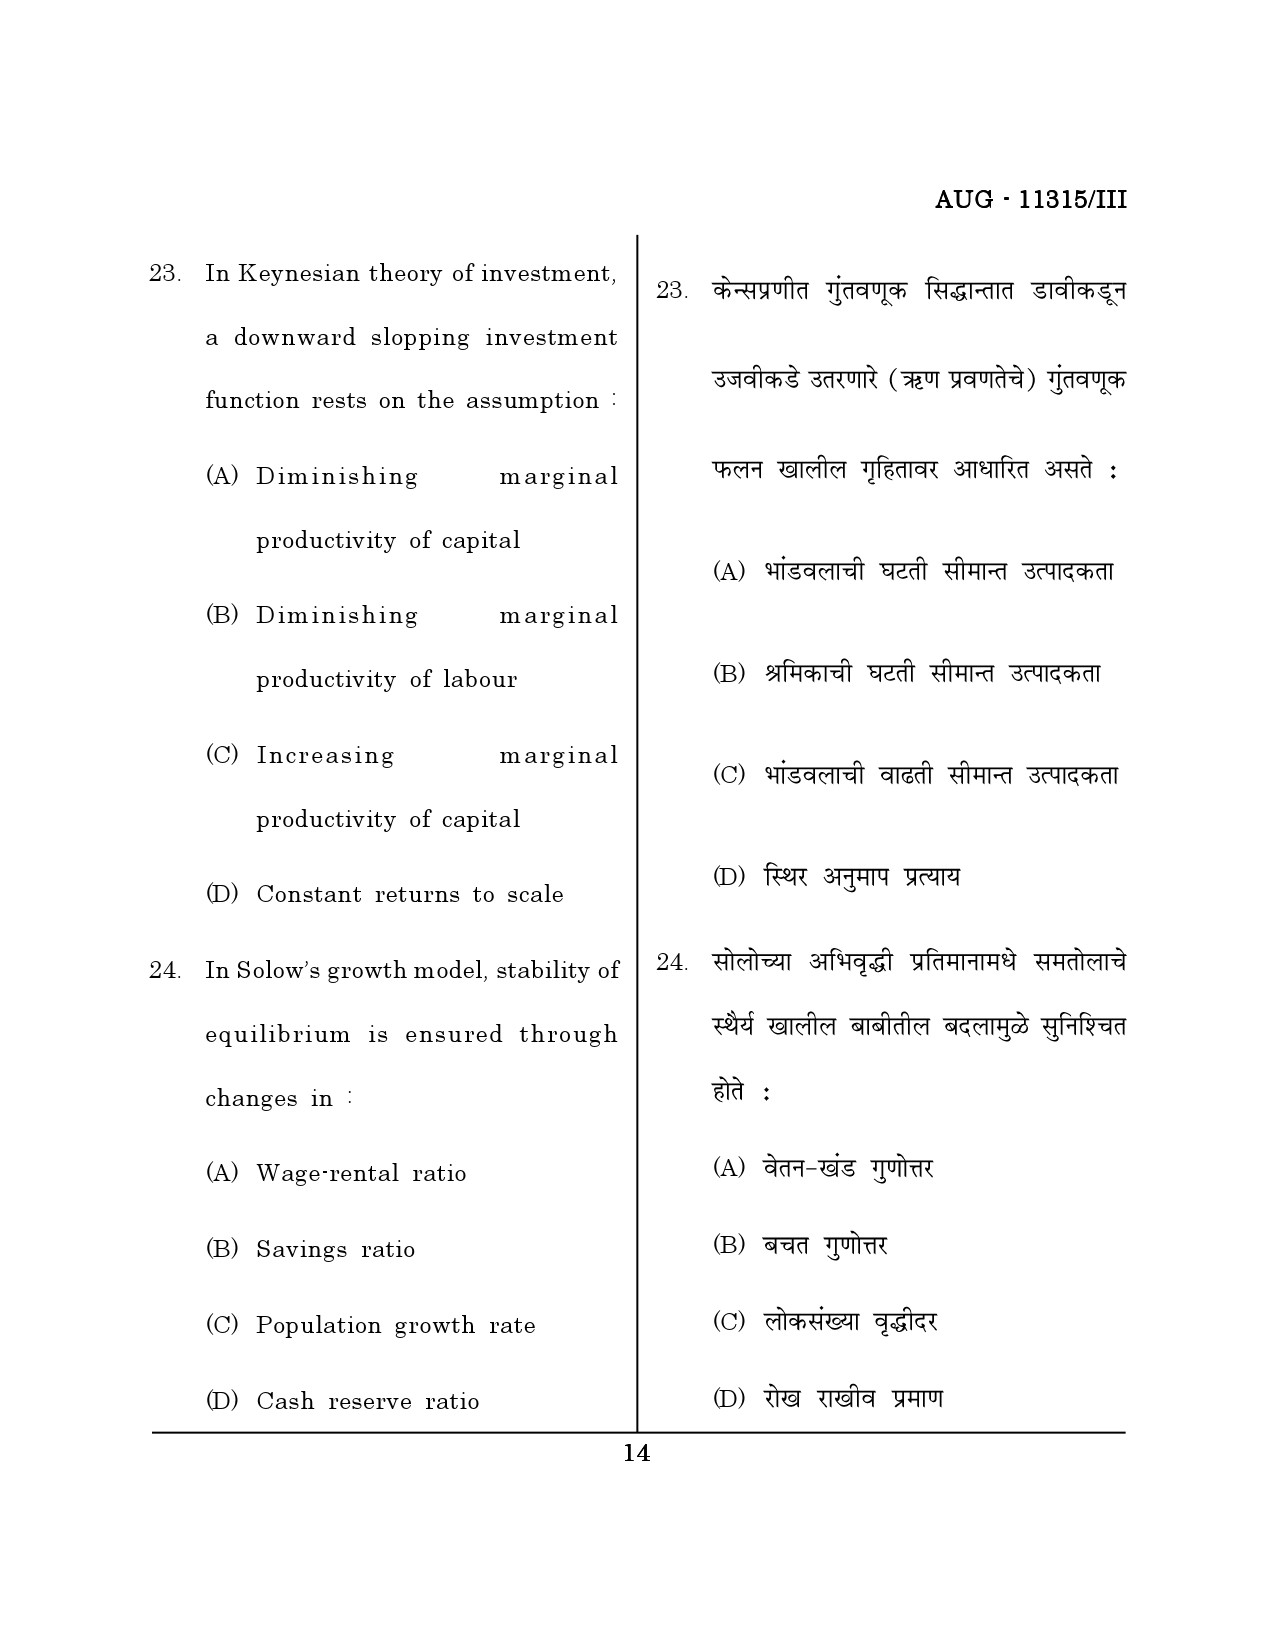 Maharashtra SET Economics Question Paper III August 2015 13